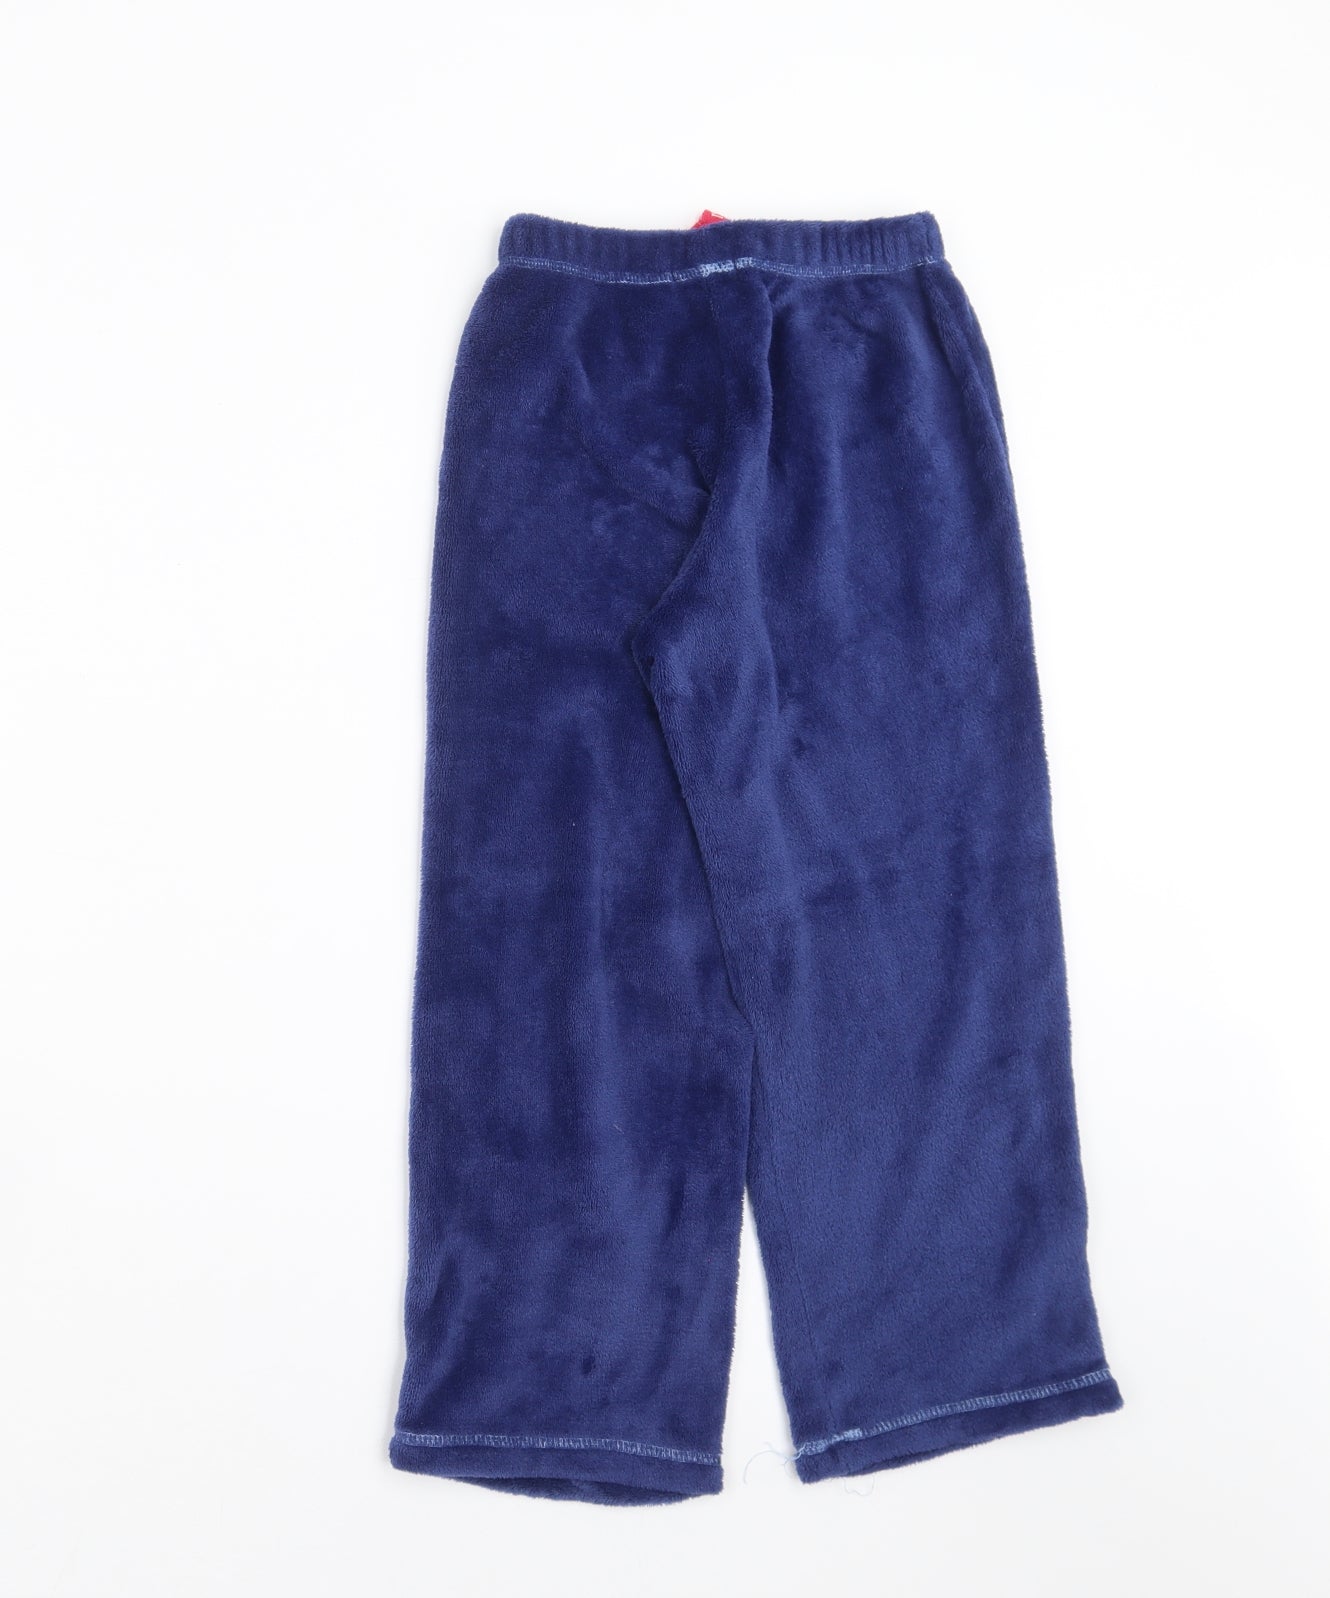 Nautica Girls Blue Solid Fleece  Pyjama Pants Size 7 Years  - dream